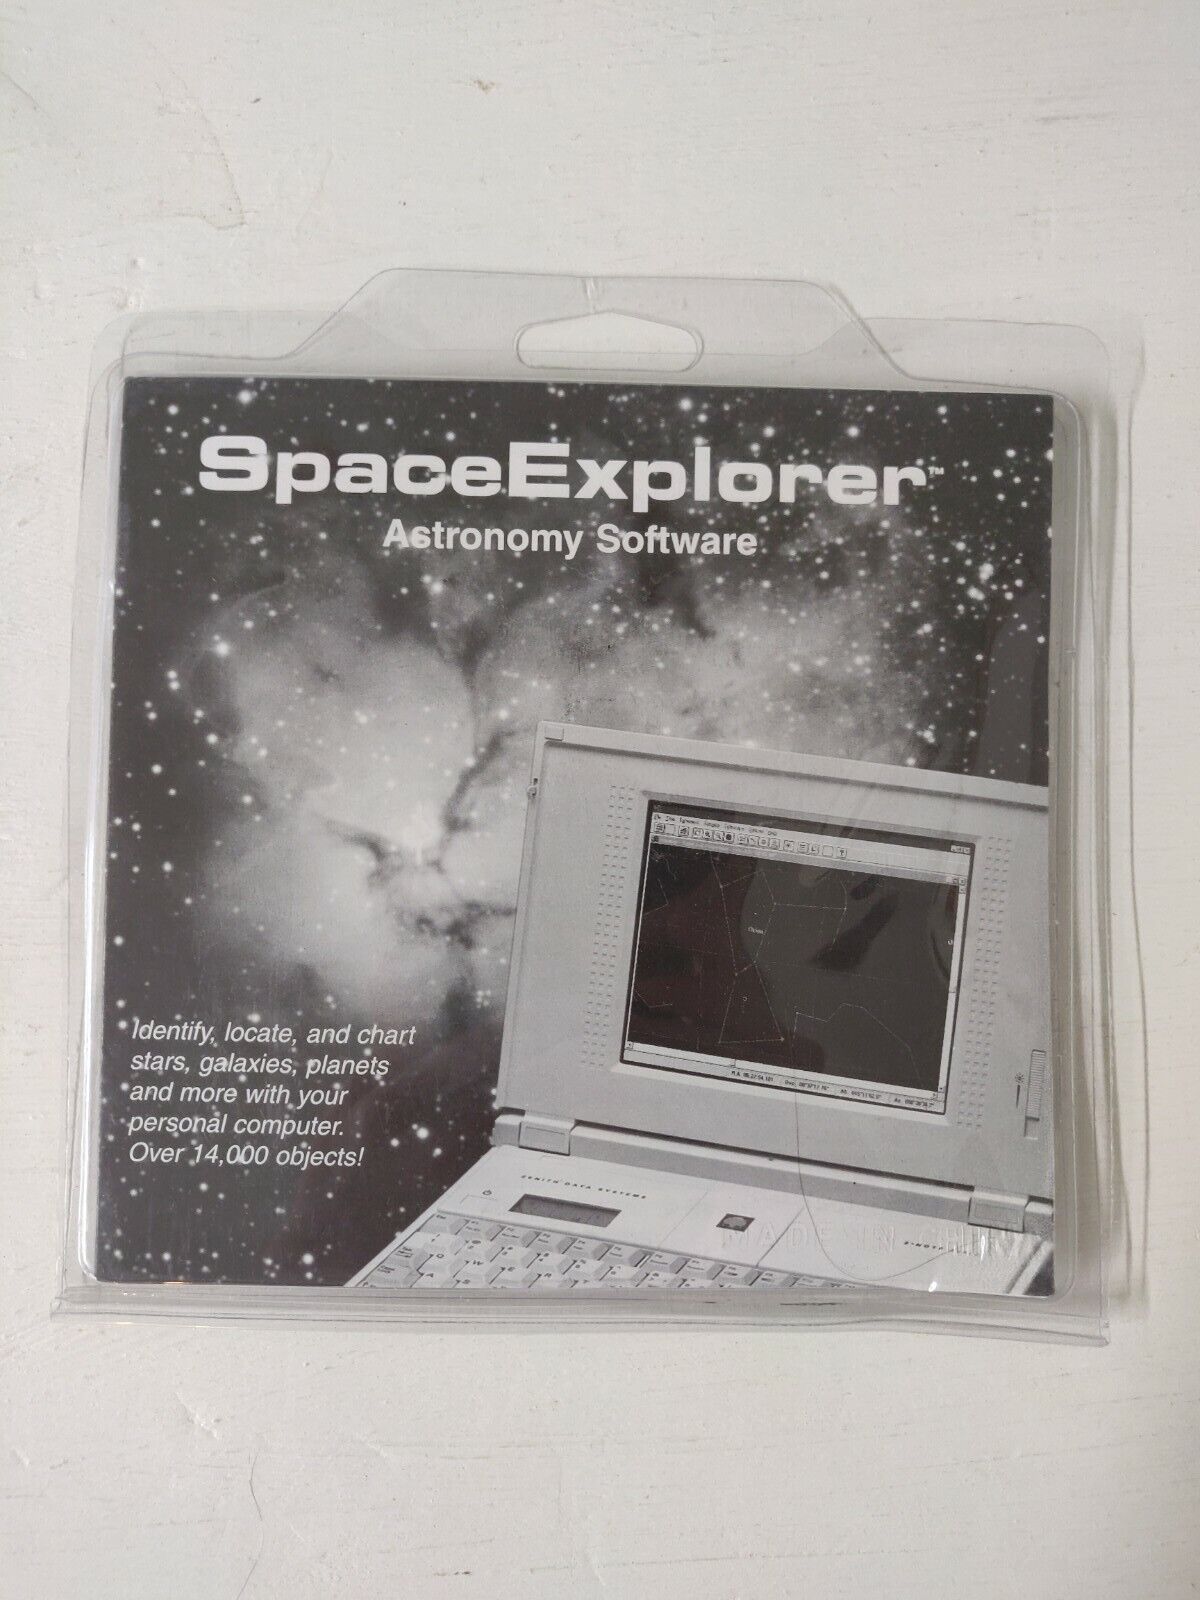 Vintage Space Explorer Floppy Disk Disc MS-DOS Windows 1.0 Astronomy Software